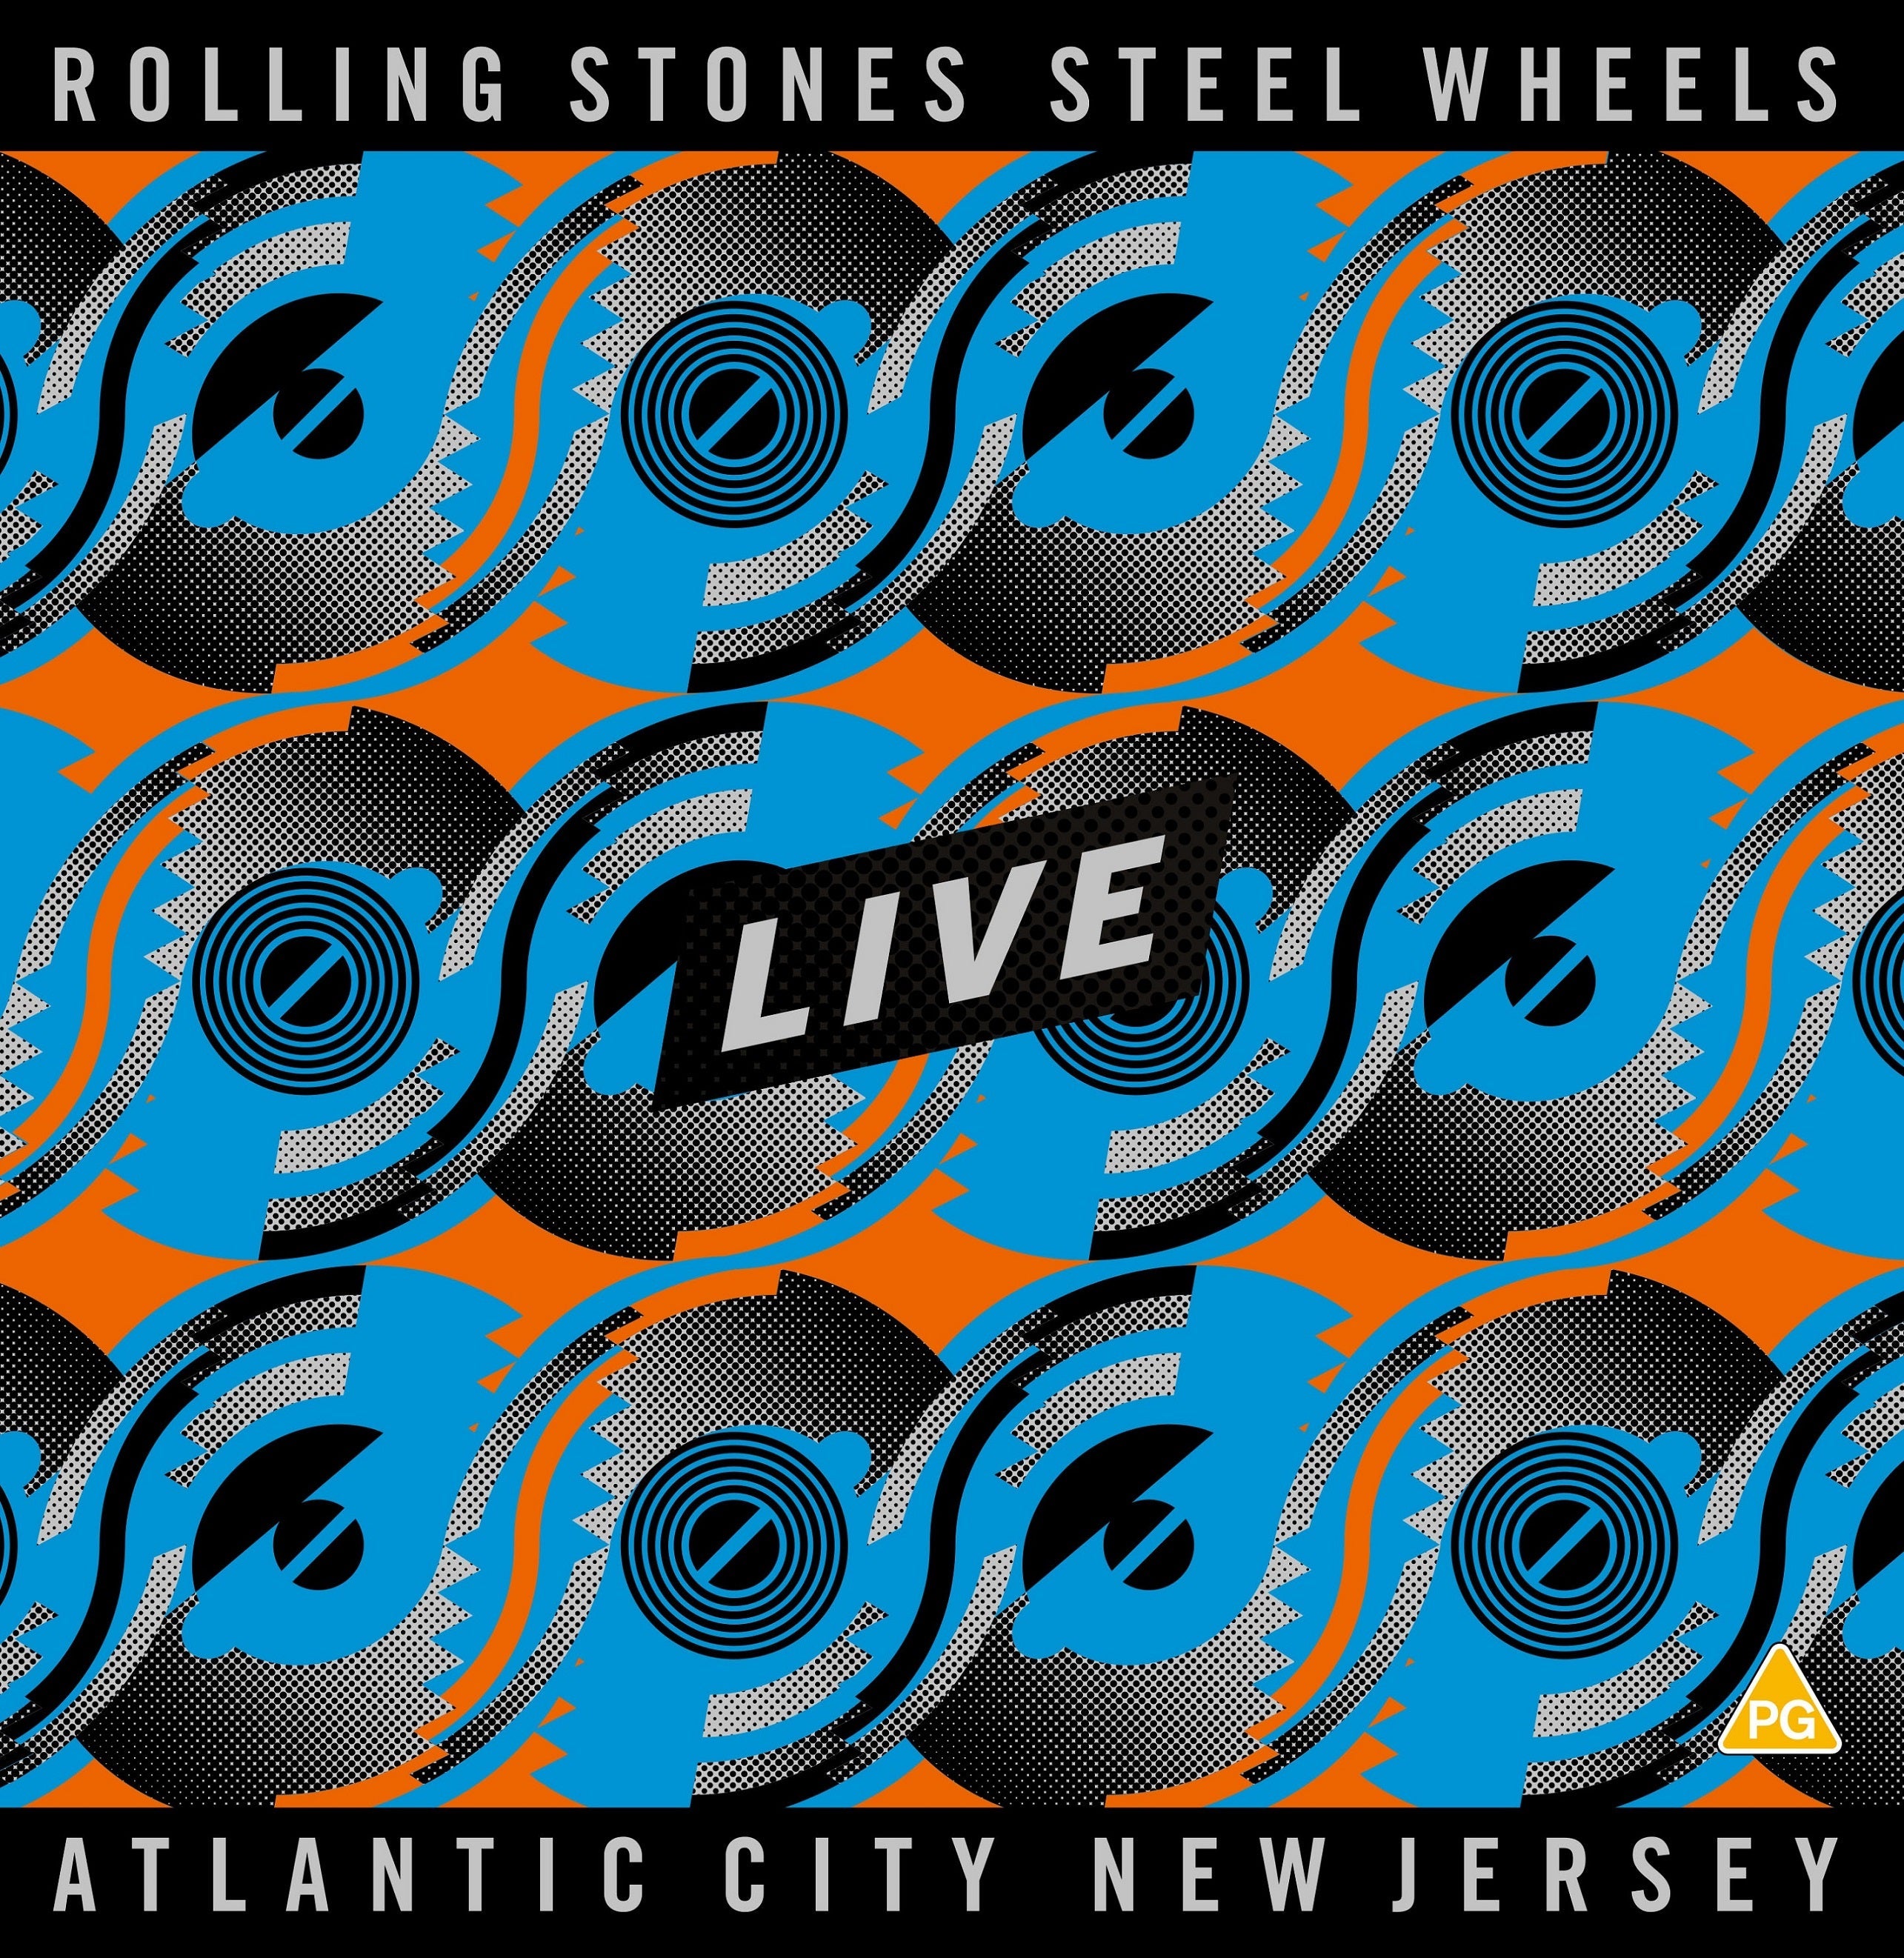 Steel Wheels Live - Coffret Deluxe 6 disques